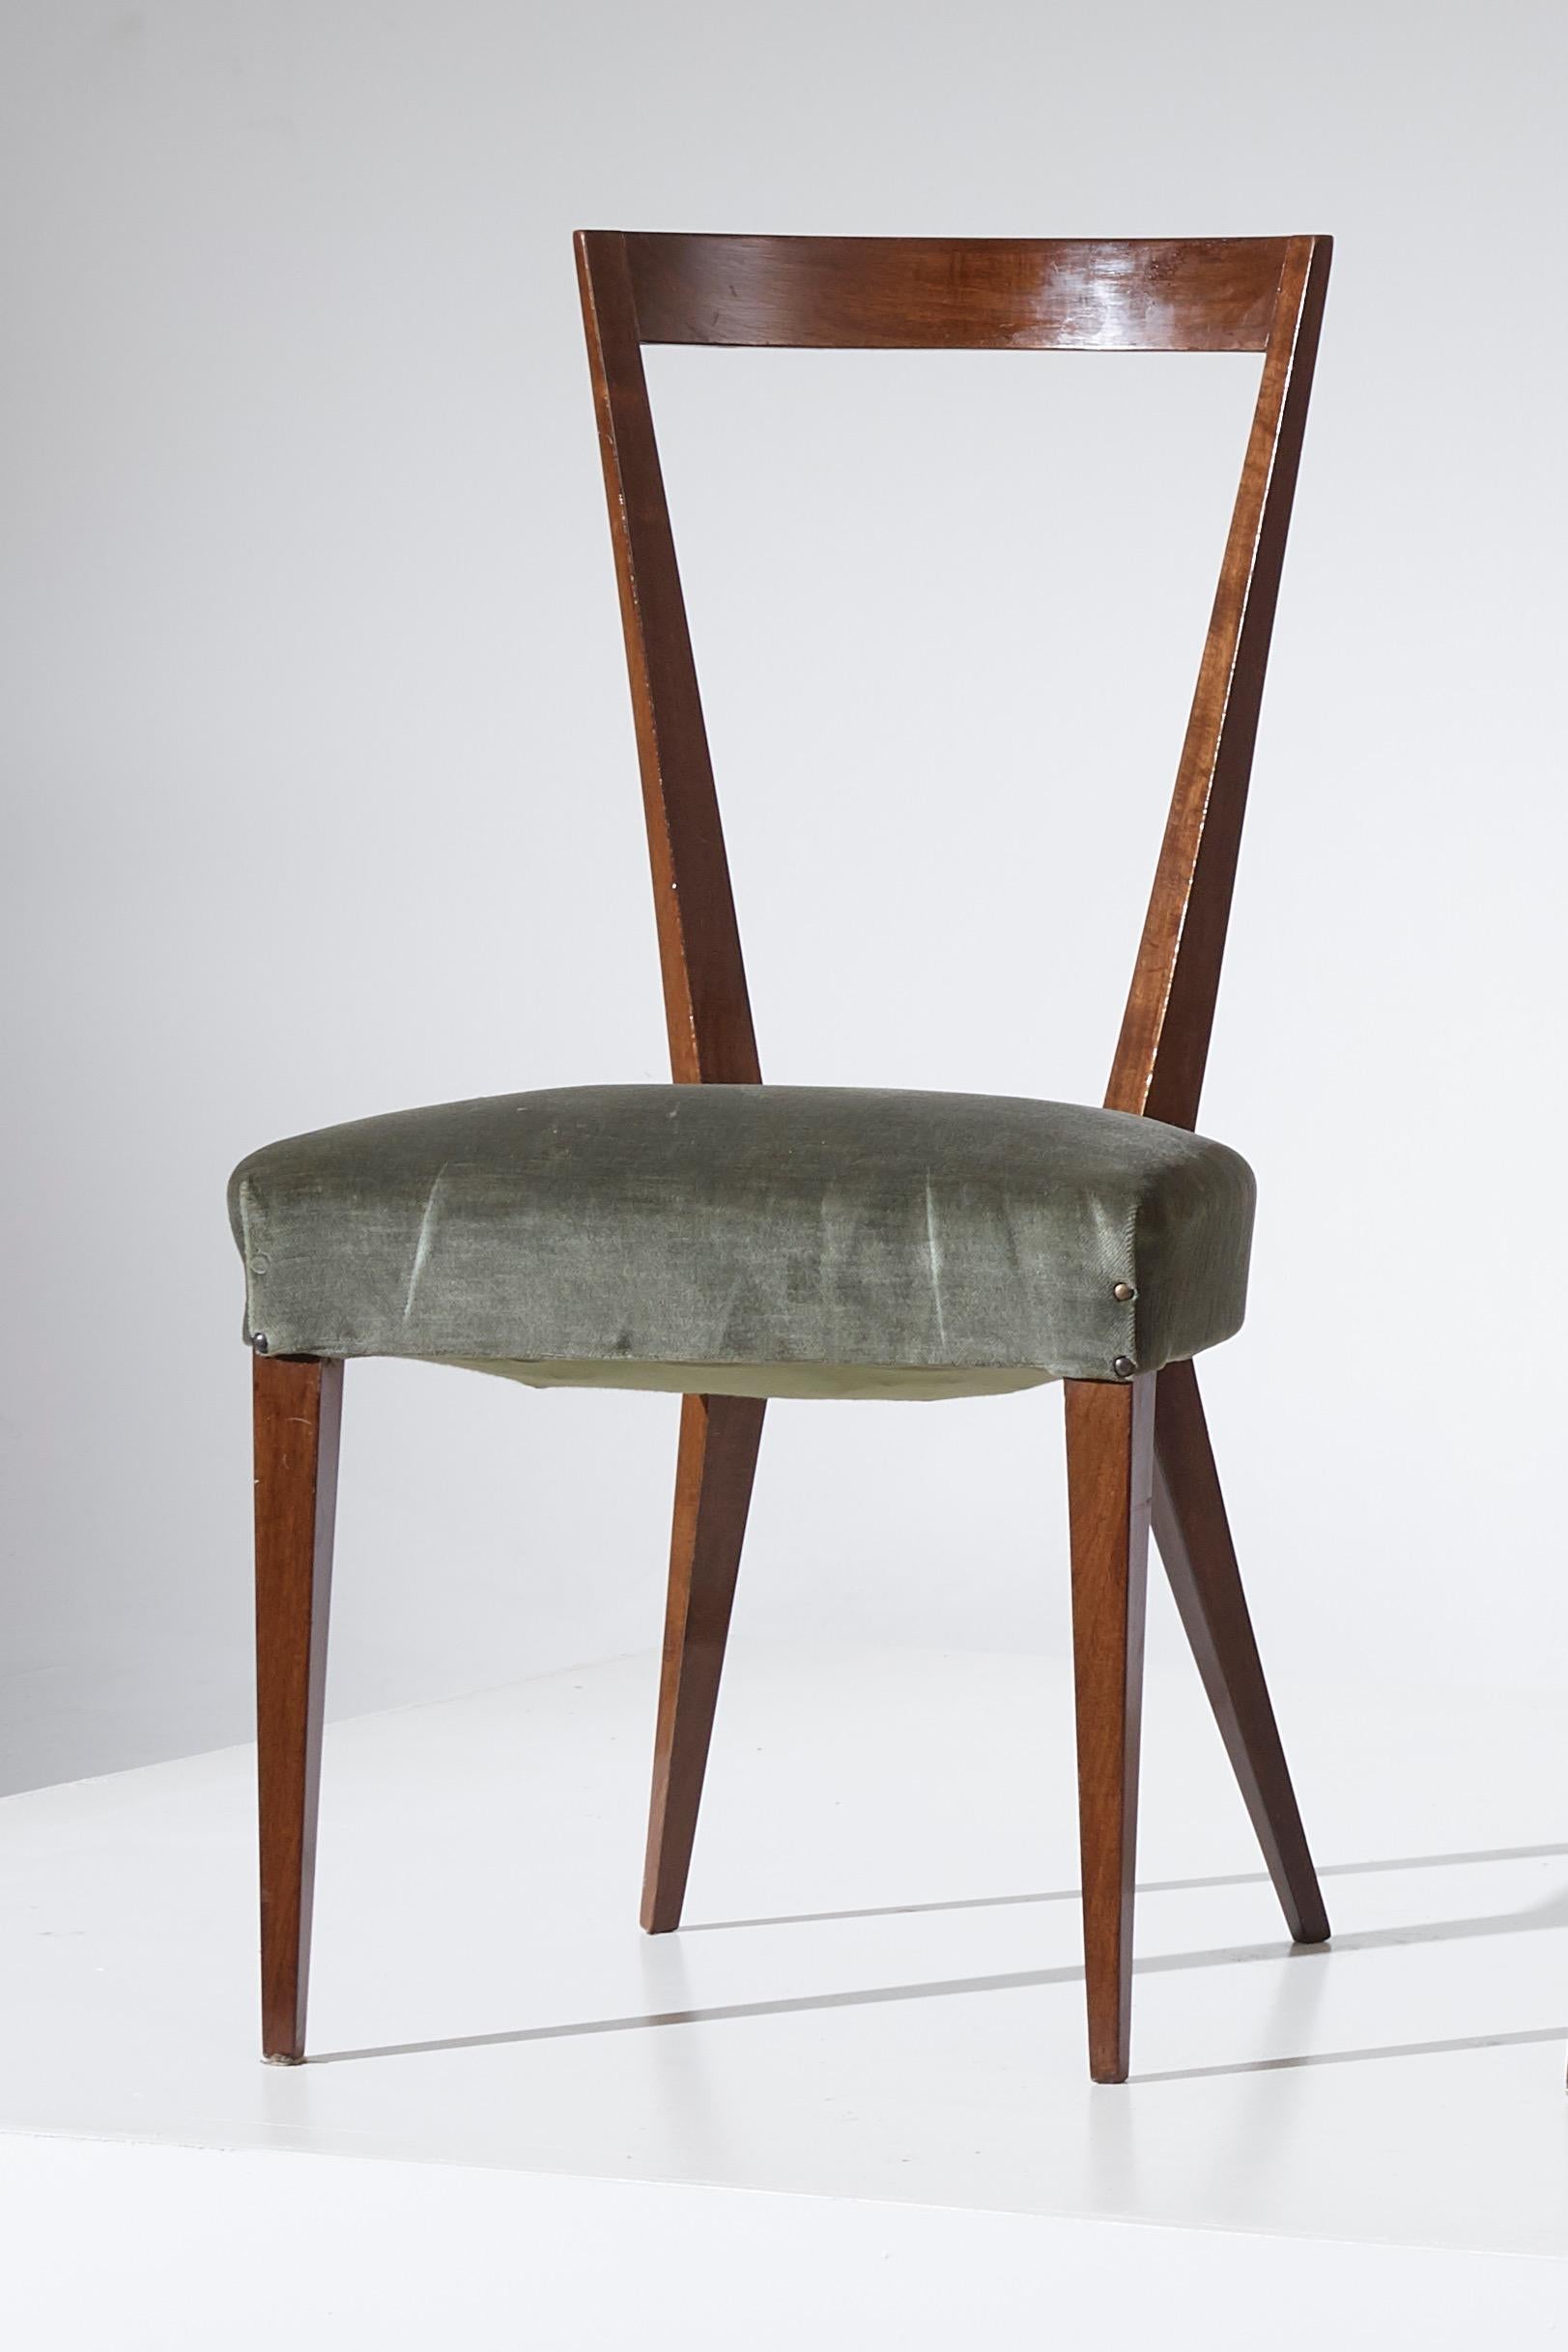 Gio Ponti for Casa E Giardino 1938 - Set of 4 Chairs in Walnut and Velvet Fabric 2